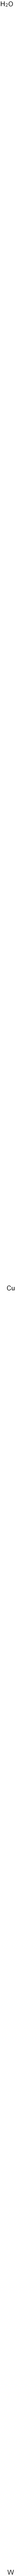 Copper(II) tungsten oxide